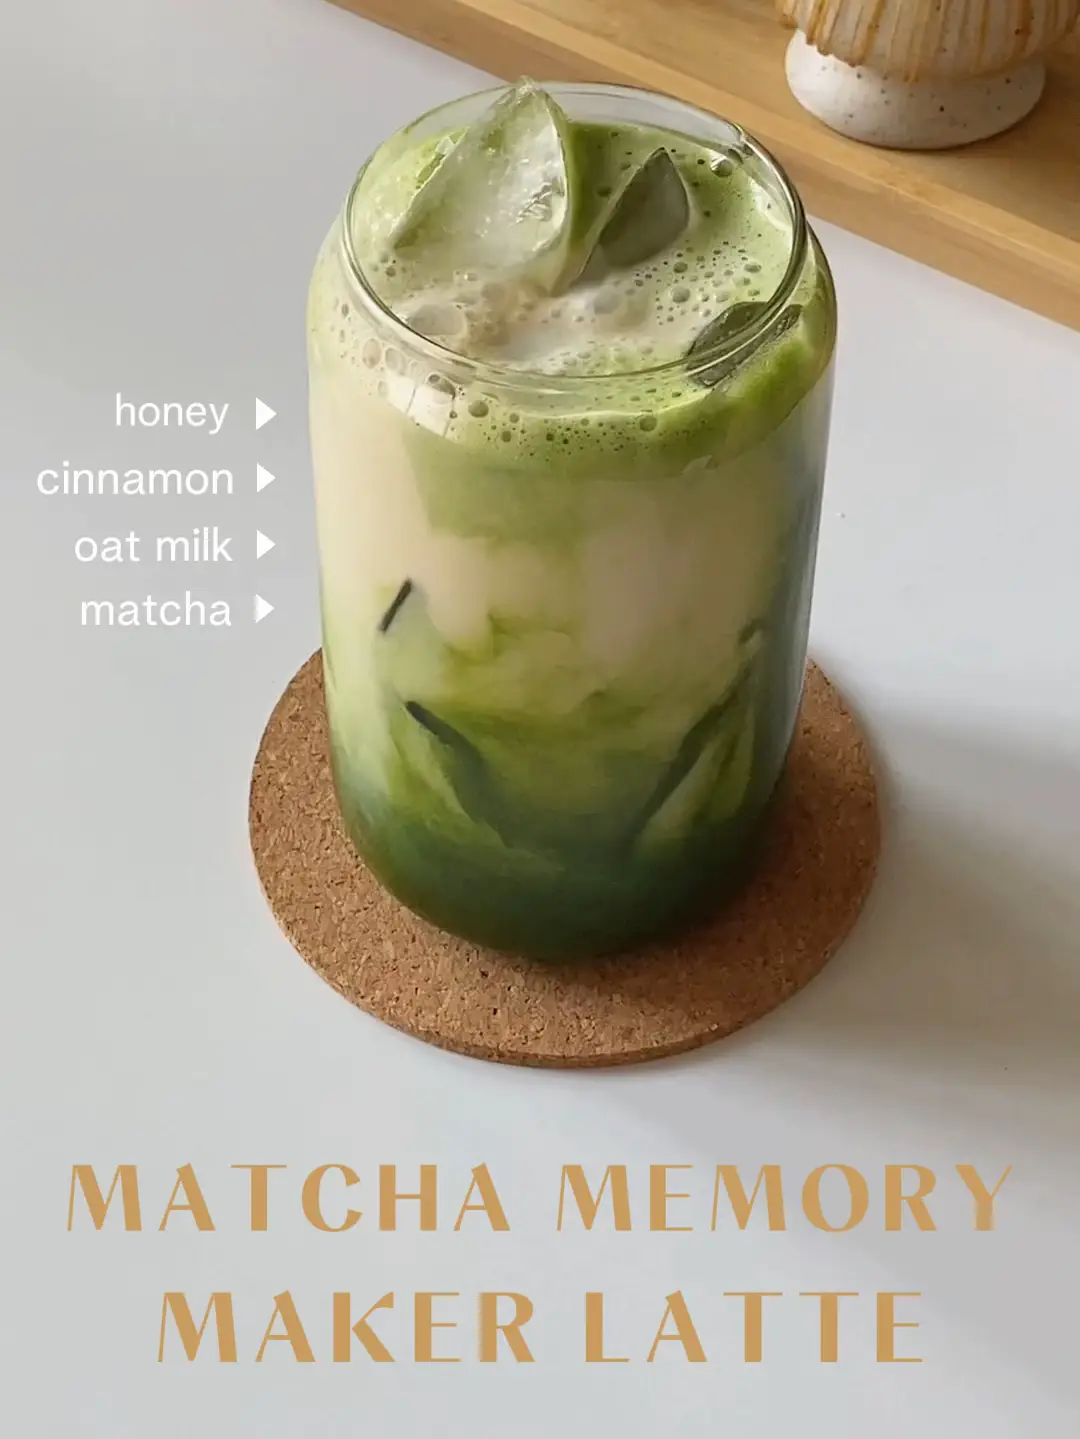 matcha memory maker latte, Video published by matcha.com